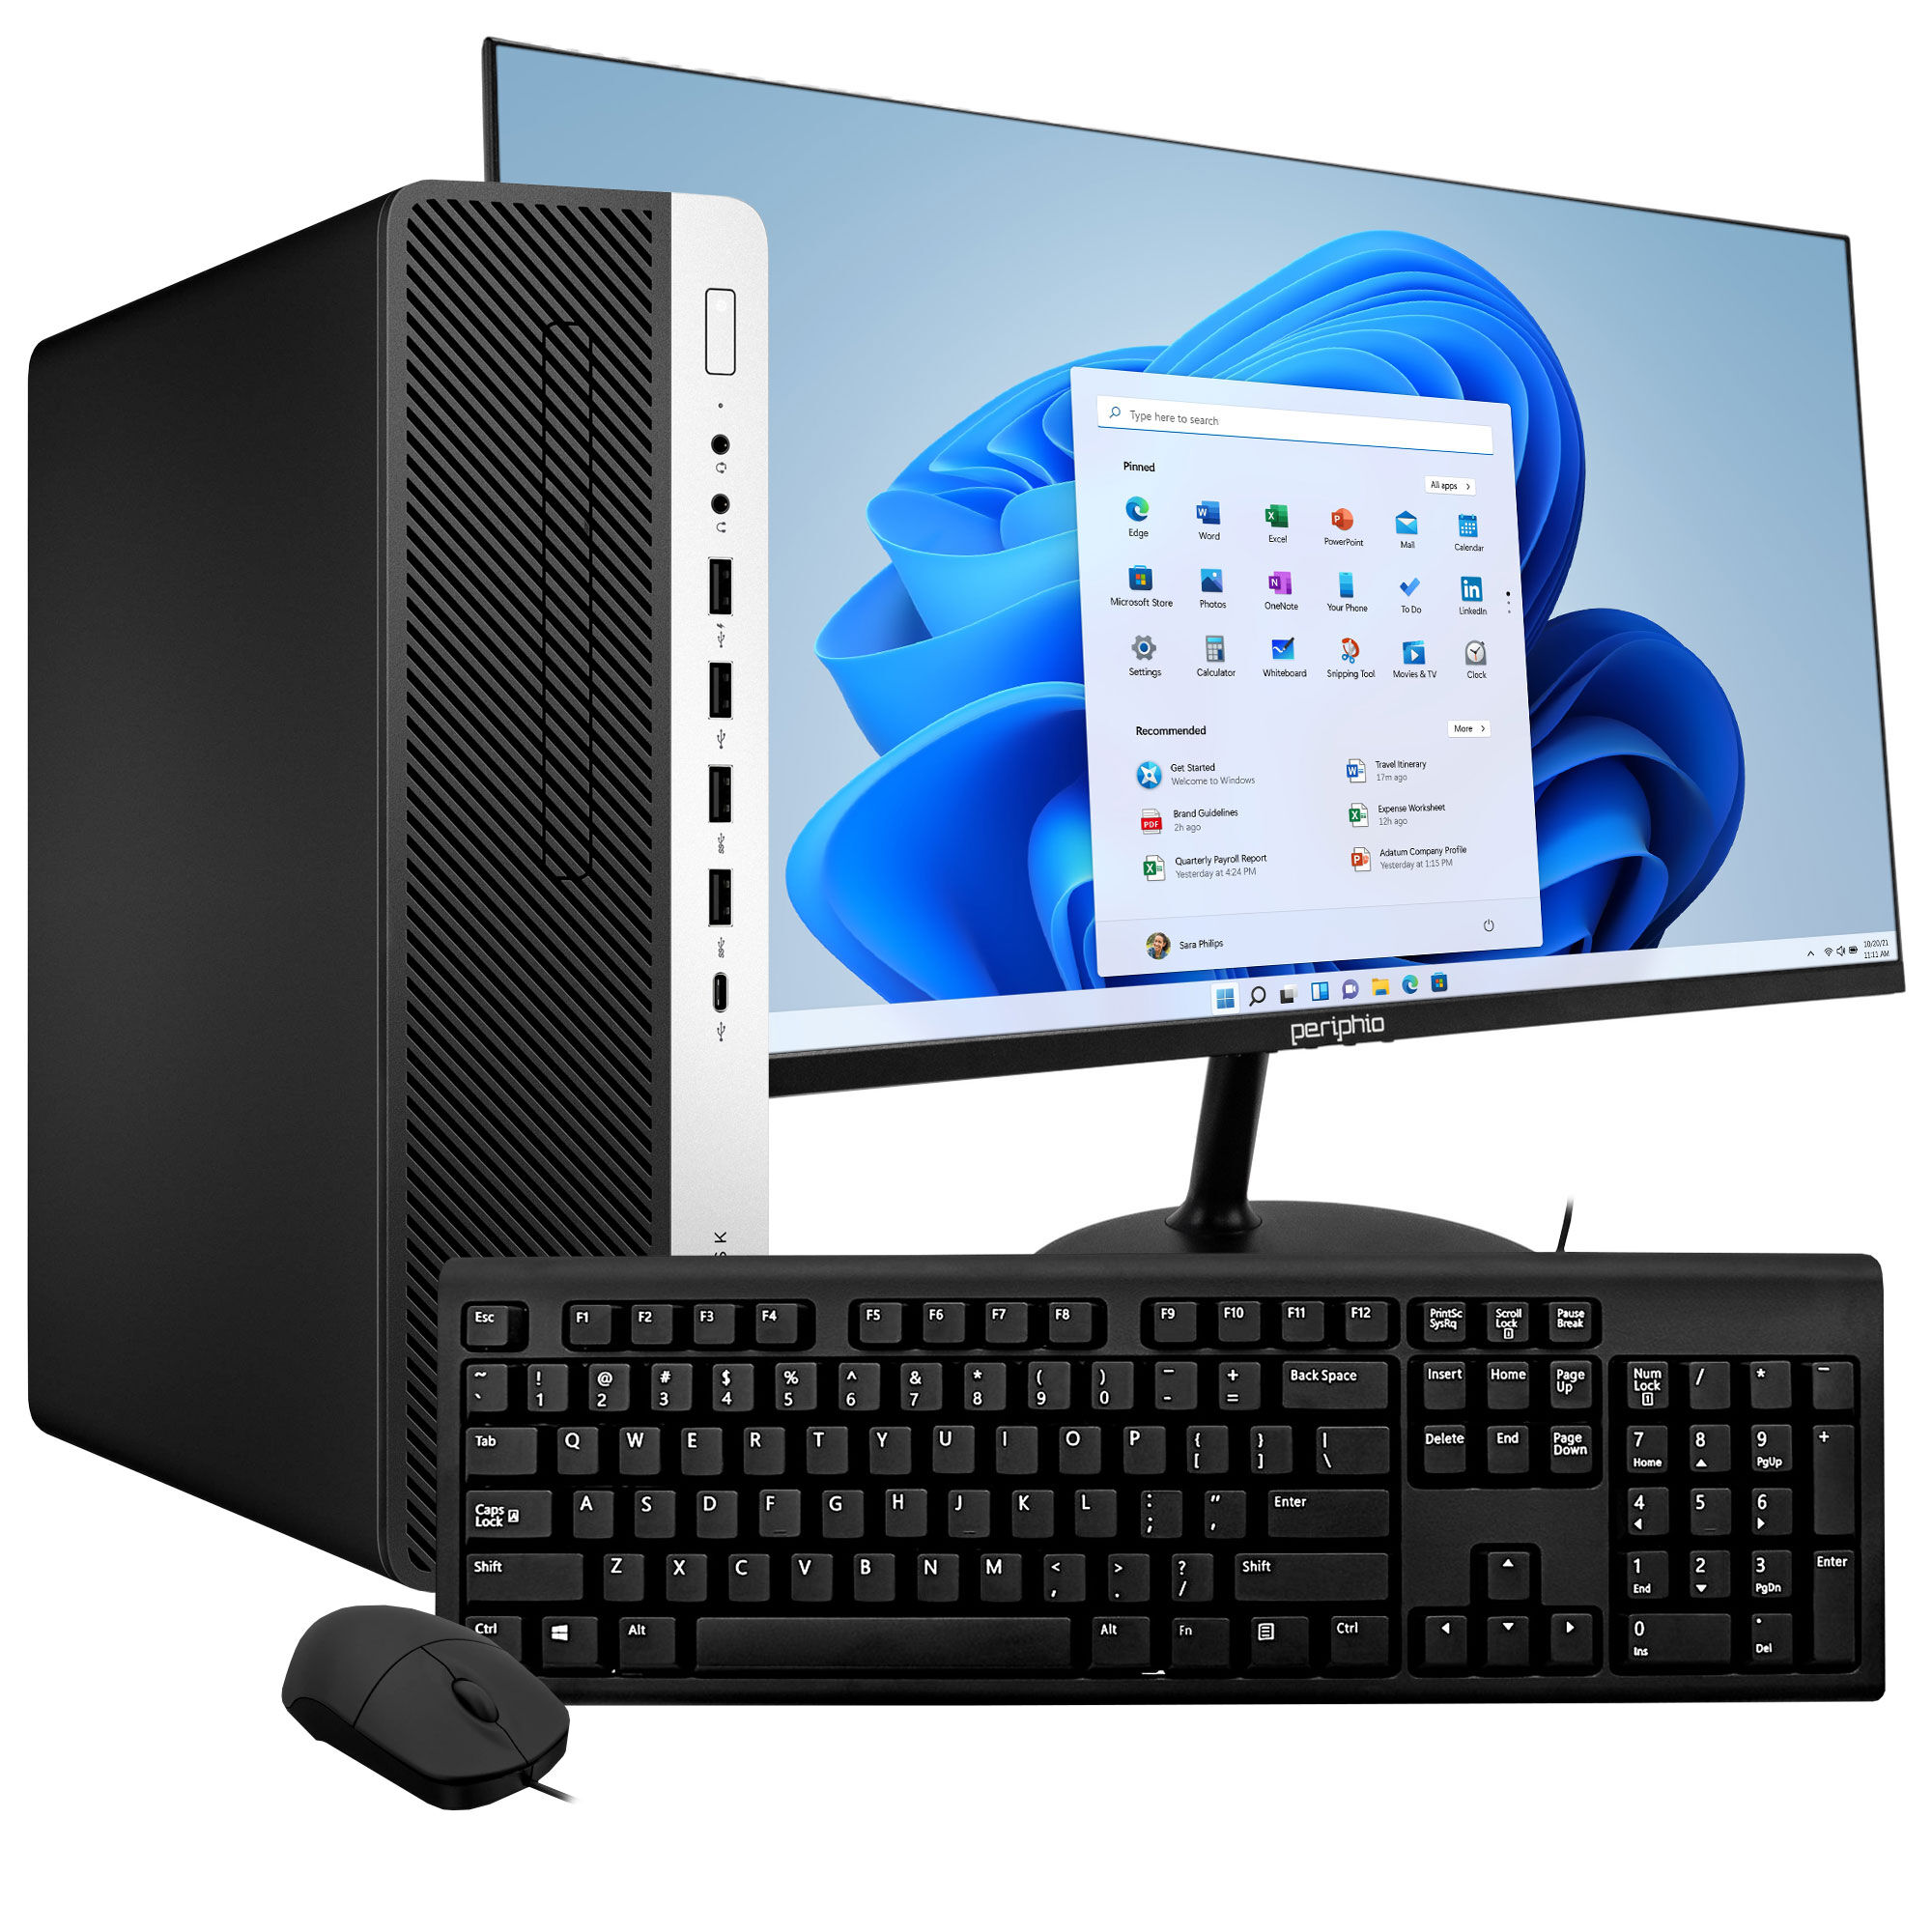 HP EliteDesk 800 G4 PC Bundle / New 24 inch Computer Monitor, Keyboard, Mouse / Intel Core i5 (8th Gen), Windows 11, WiFi